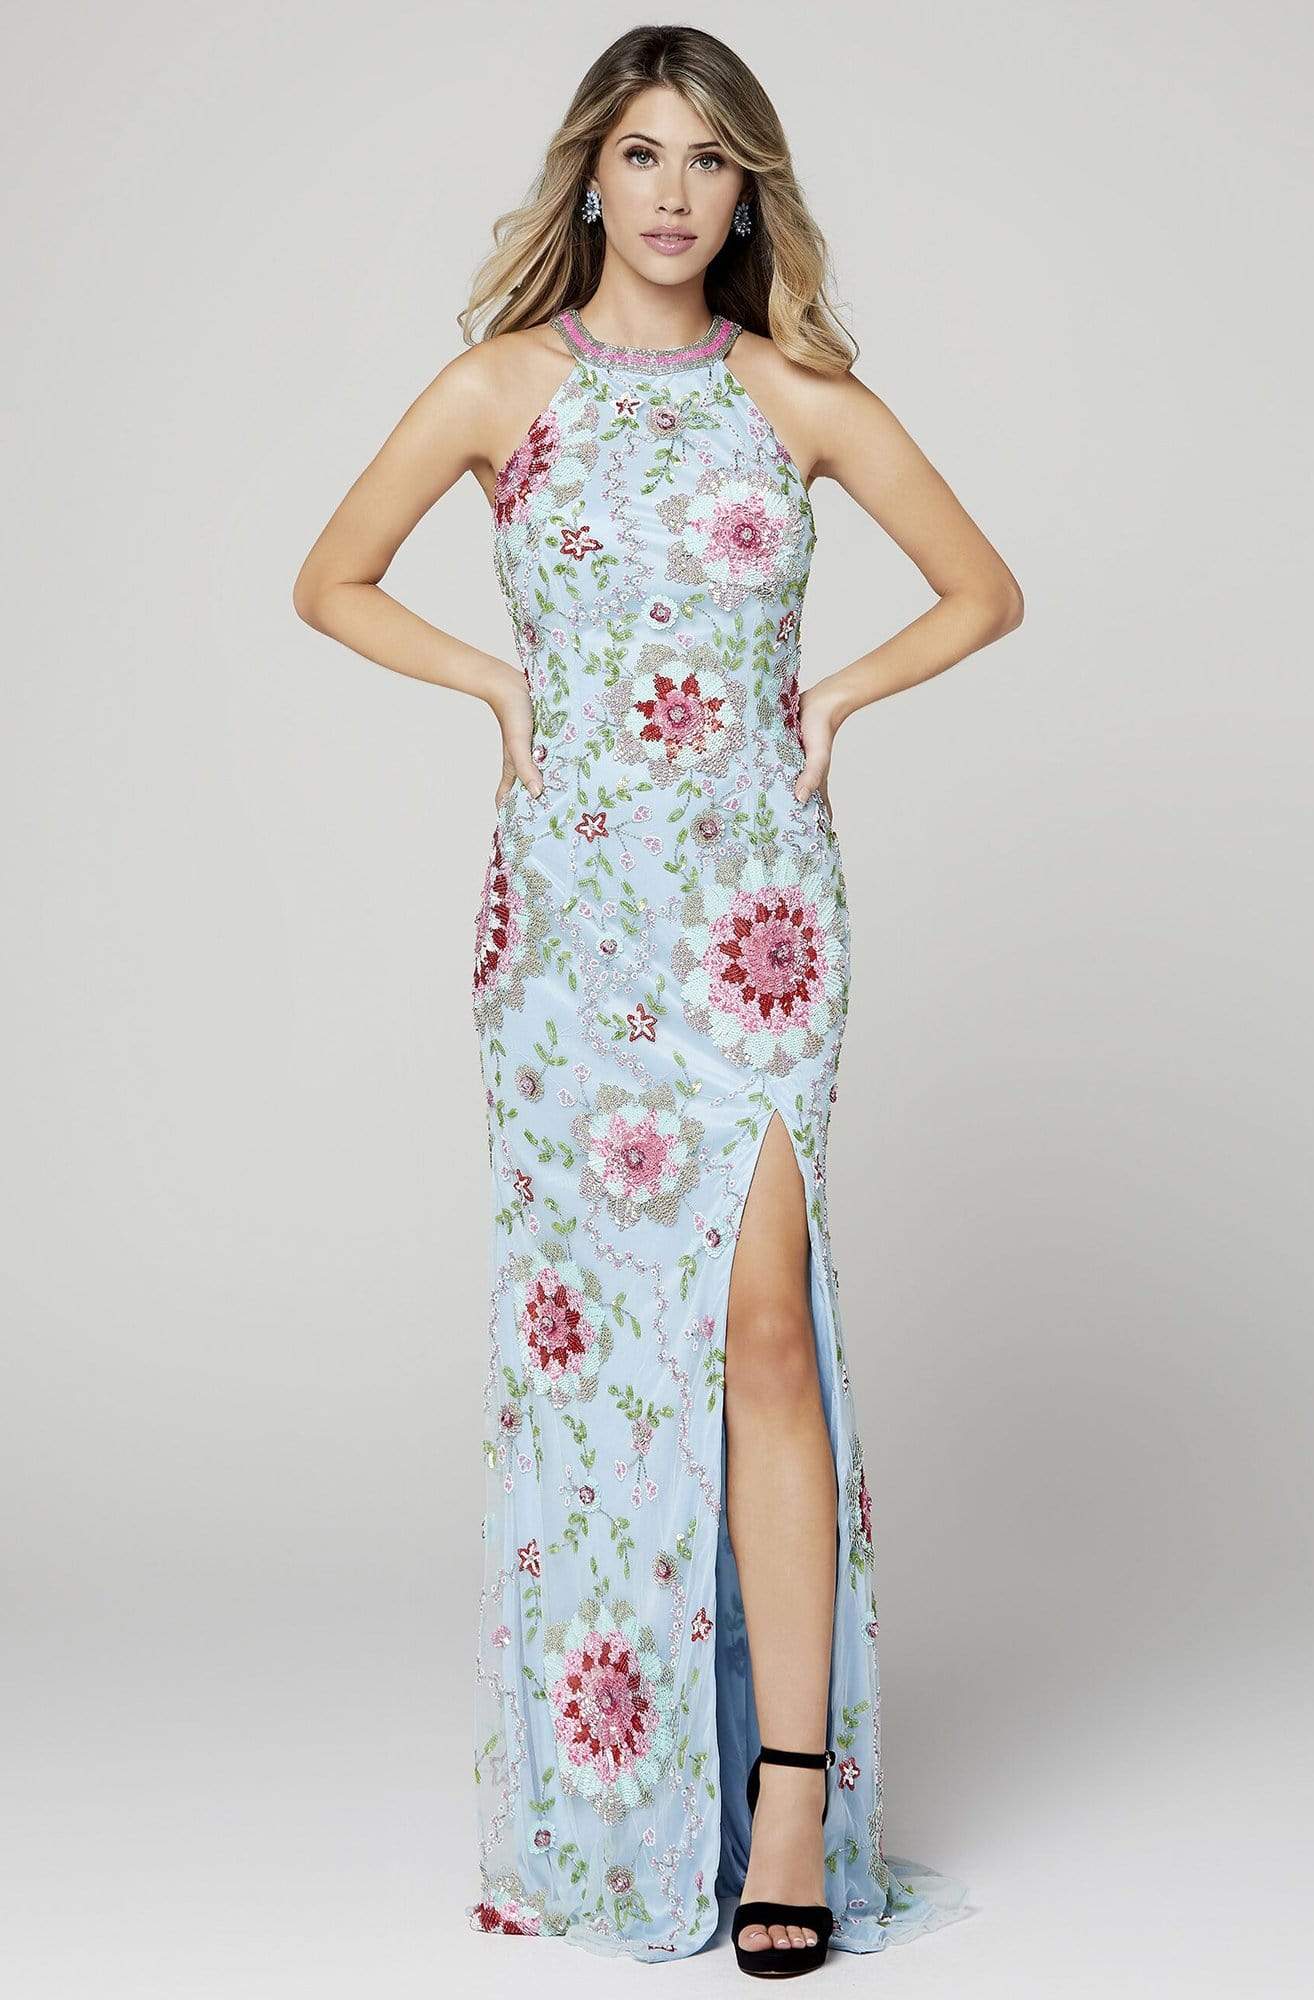 Primavera Couture - 3461 Sequined Halter Neck Sheath Dress Prom Dresses 0 / Powder Blue